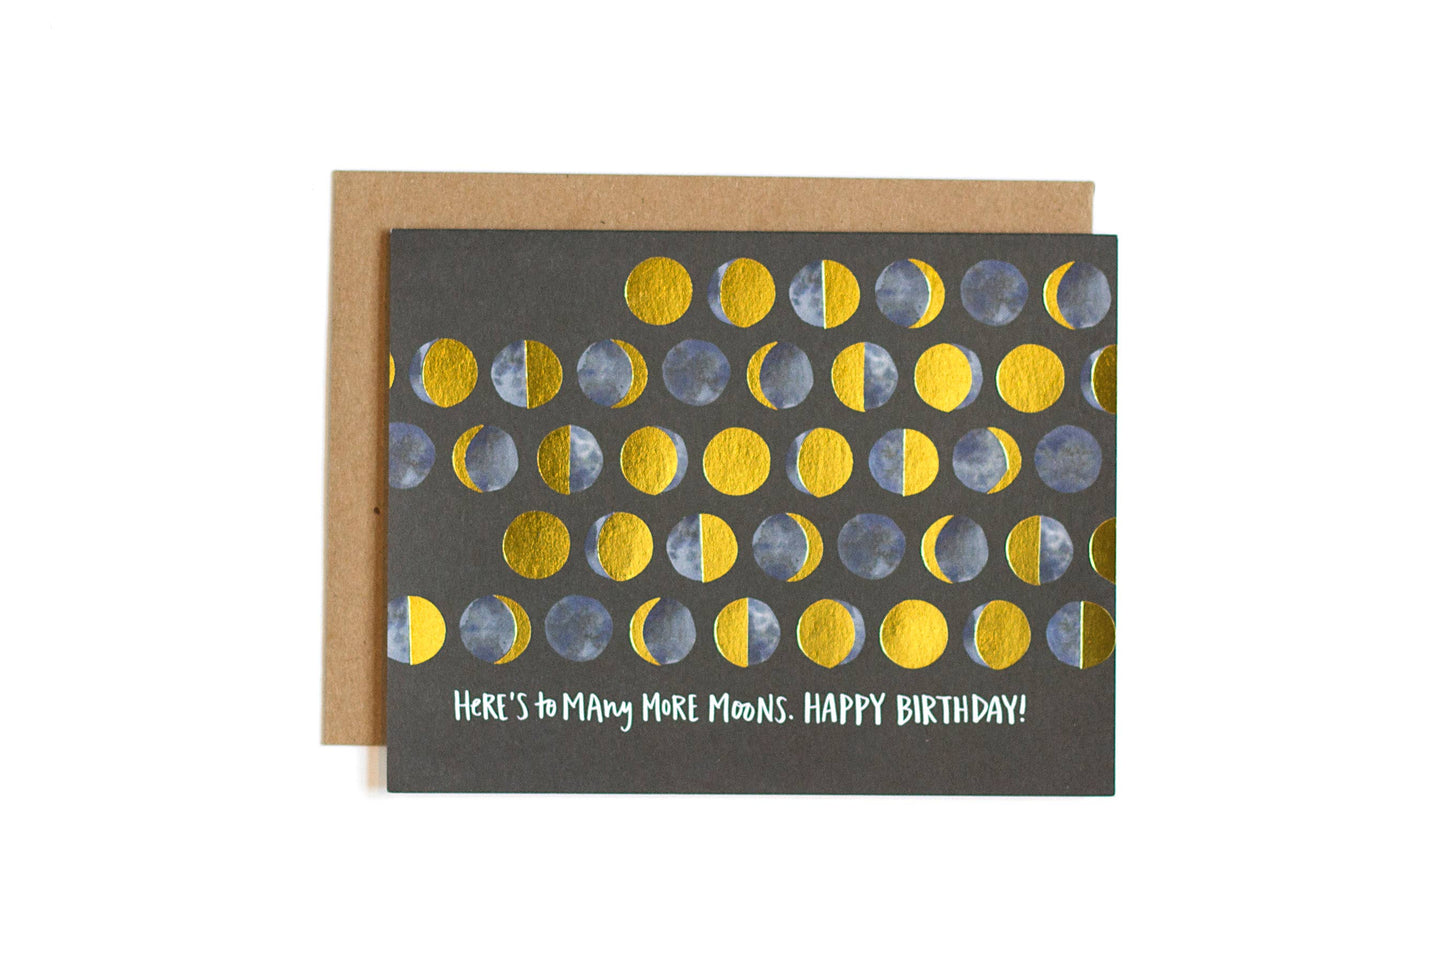 Many Moons Birthday Greeting Card